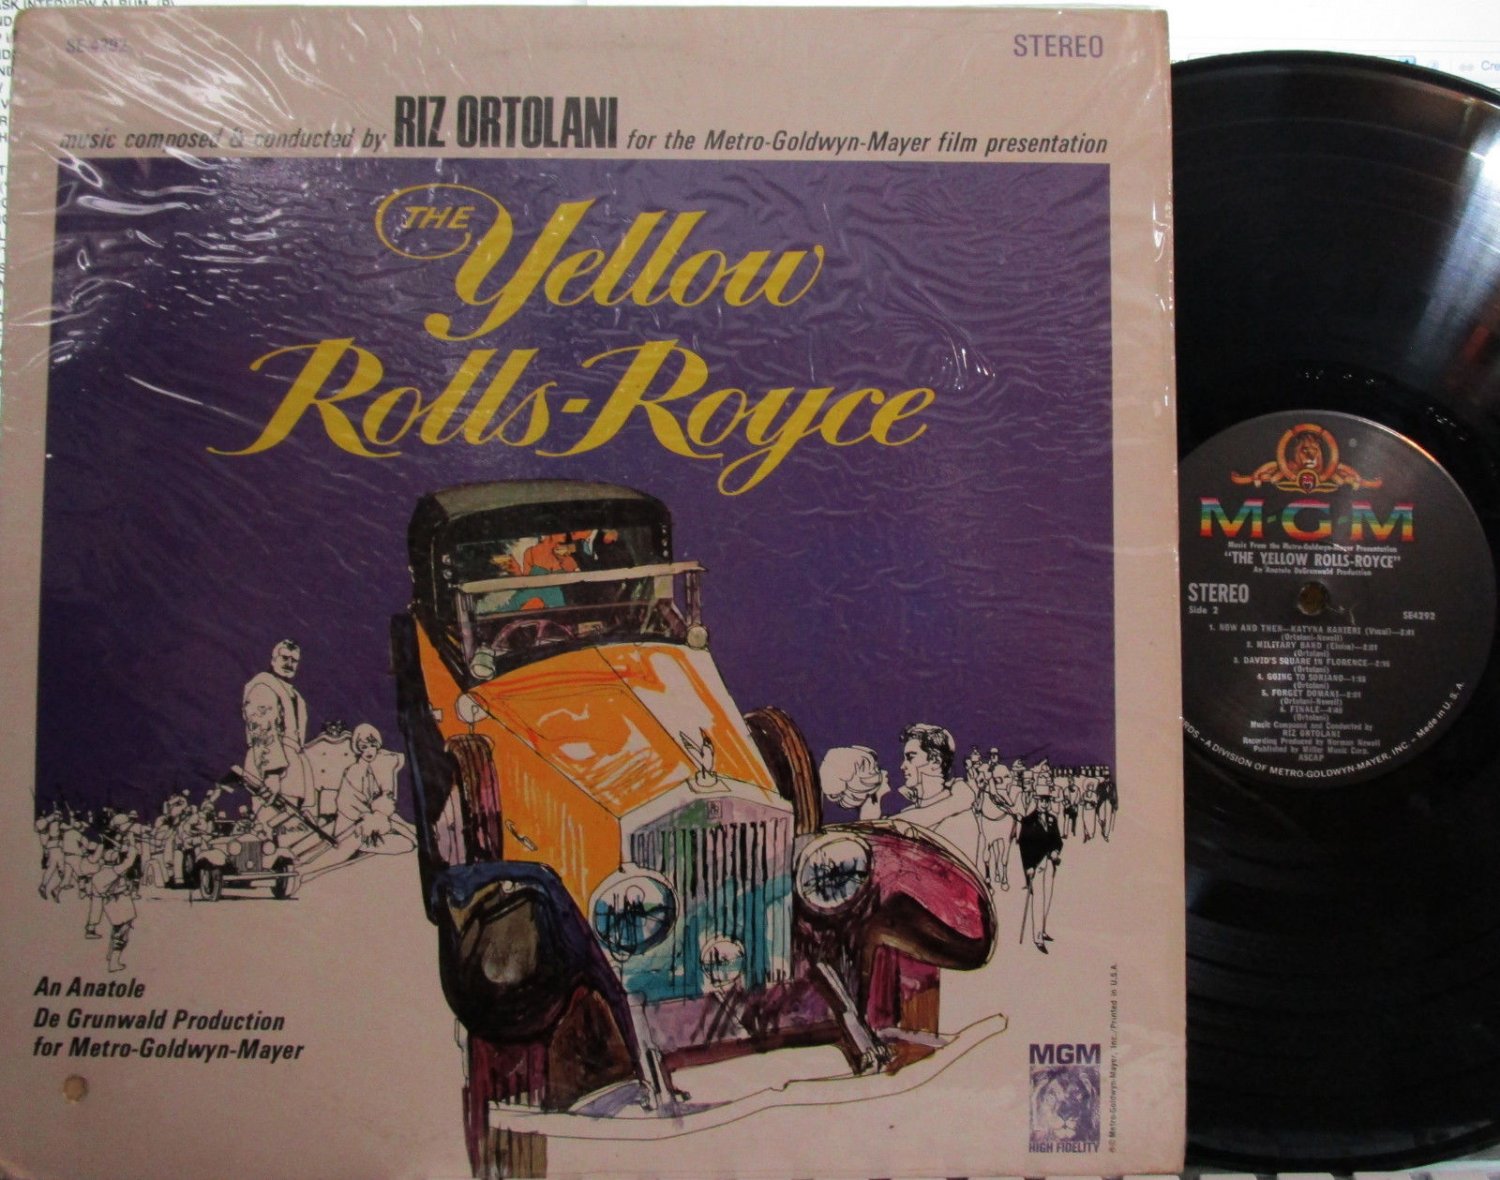 Yellow Rolls-Royce (Soundtrack) (MGM 4292) (Katyna Ranieri) (Ingrid ...